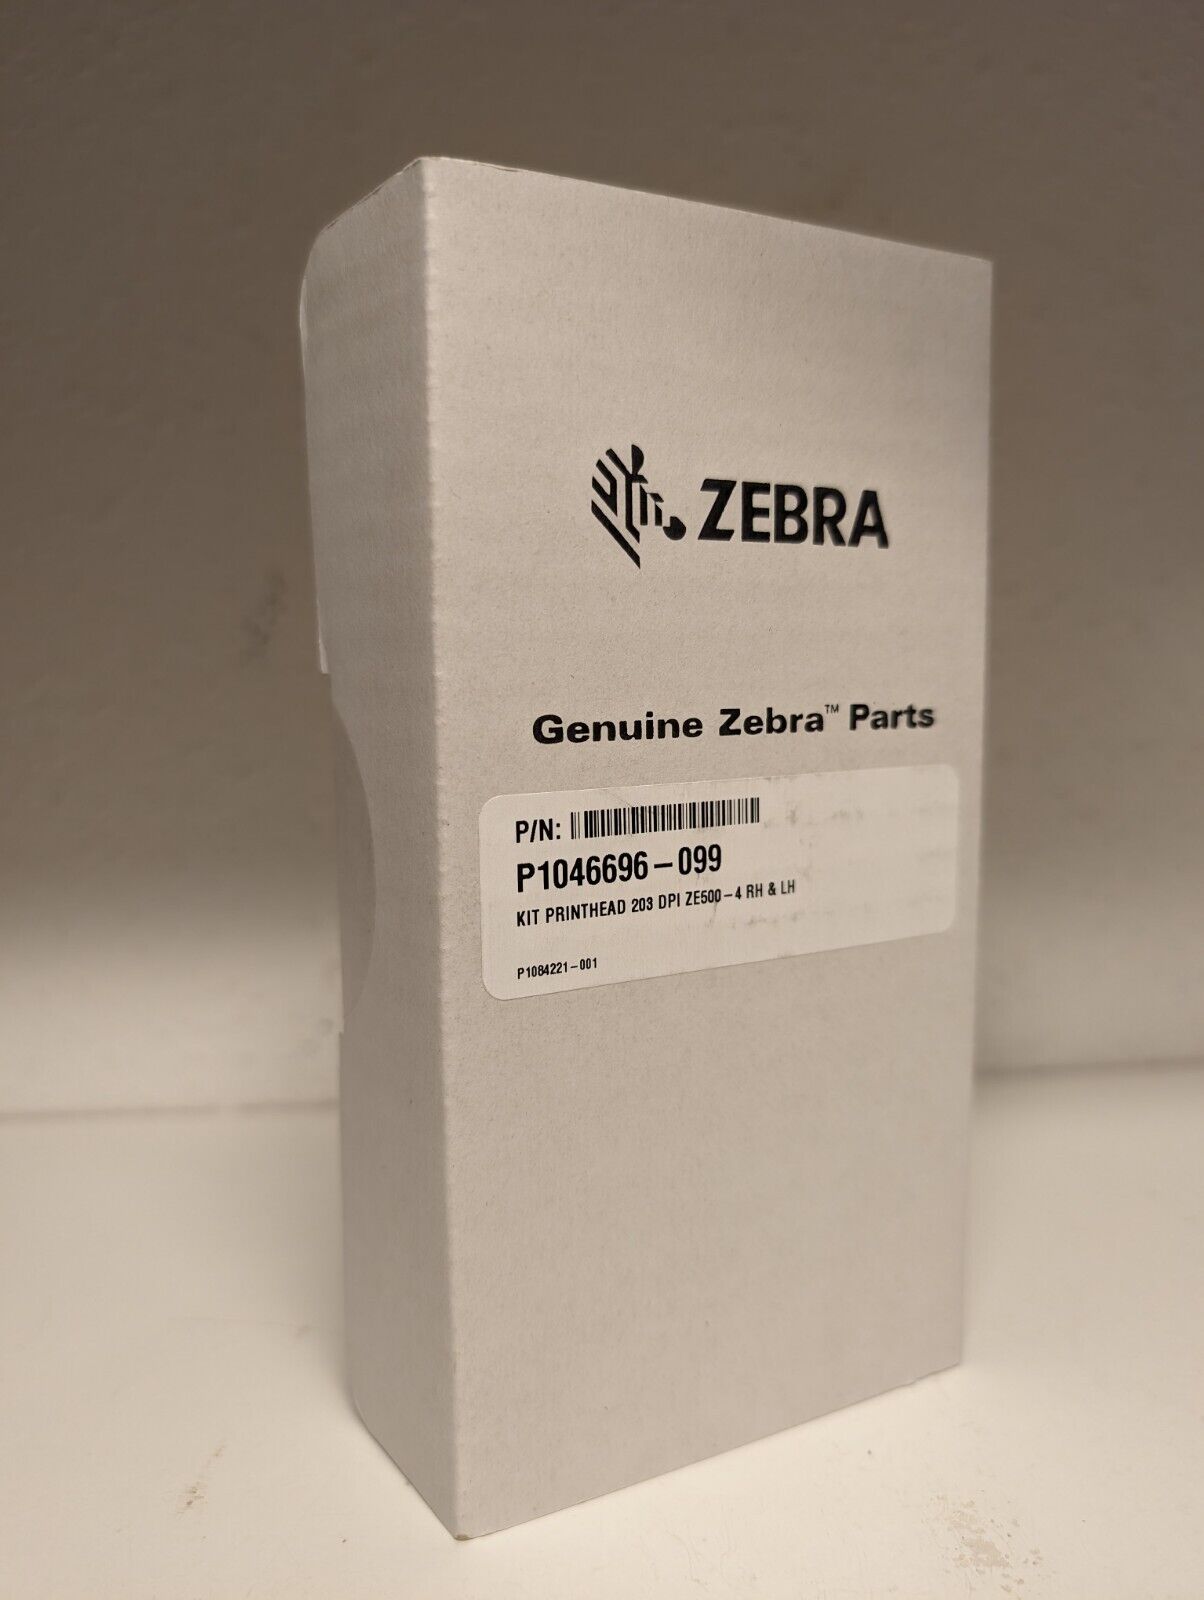 NEW GENUINE Zebra PrintHead Part # P1046696-099 203DPI ZE500-4 RH & LH